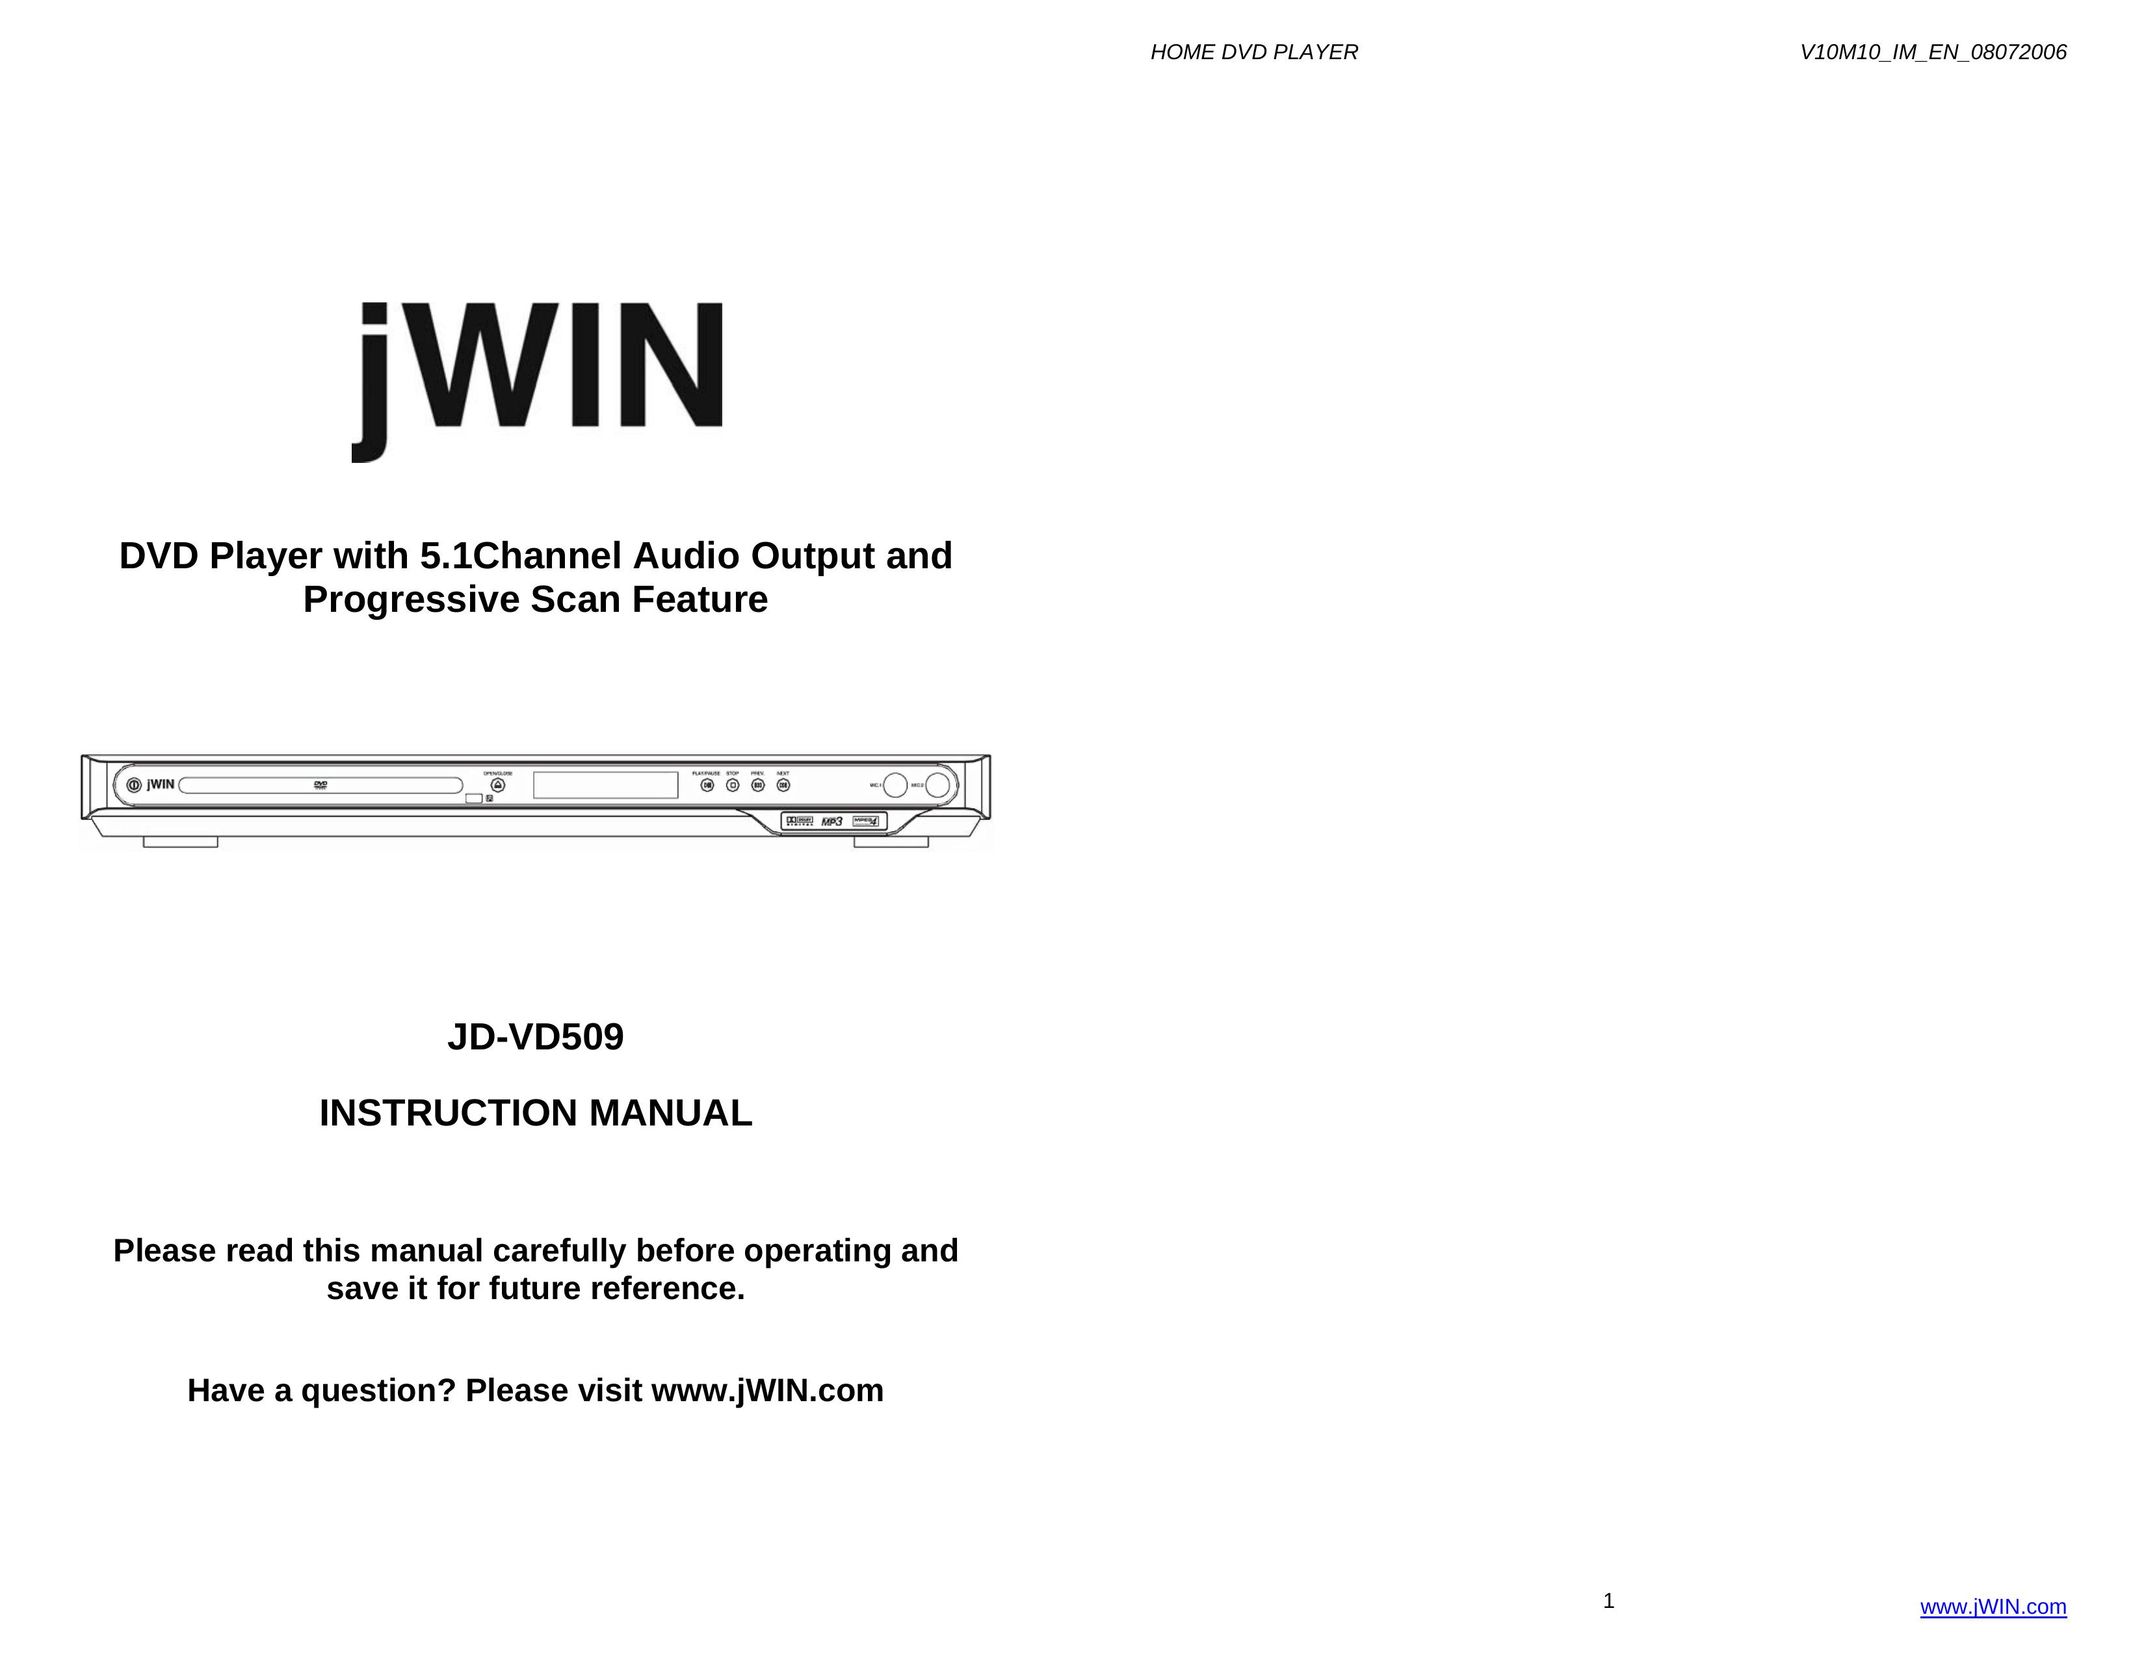 Jwin JD-VD509 DVD Player User Manual